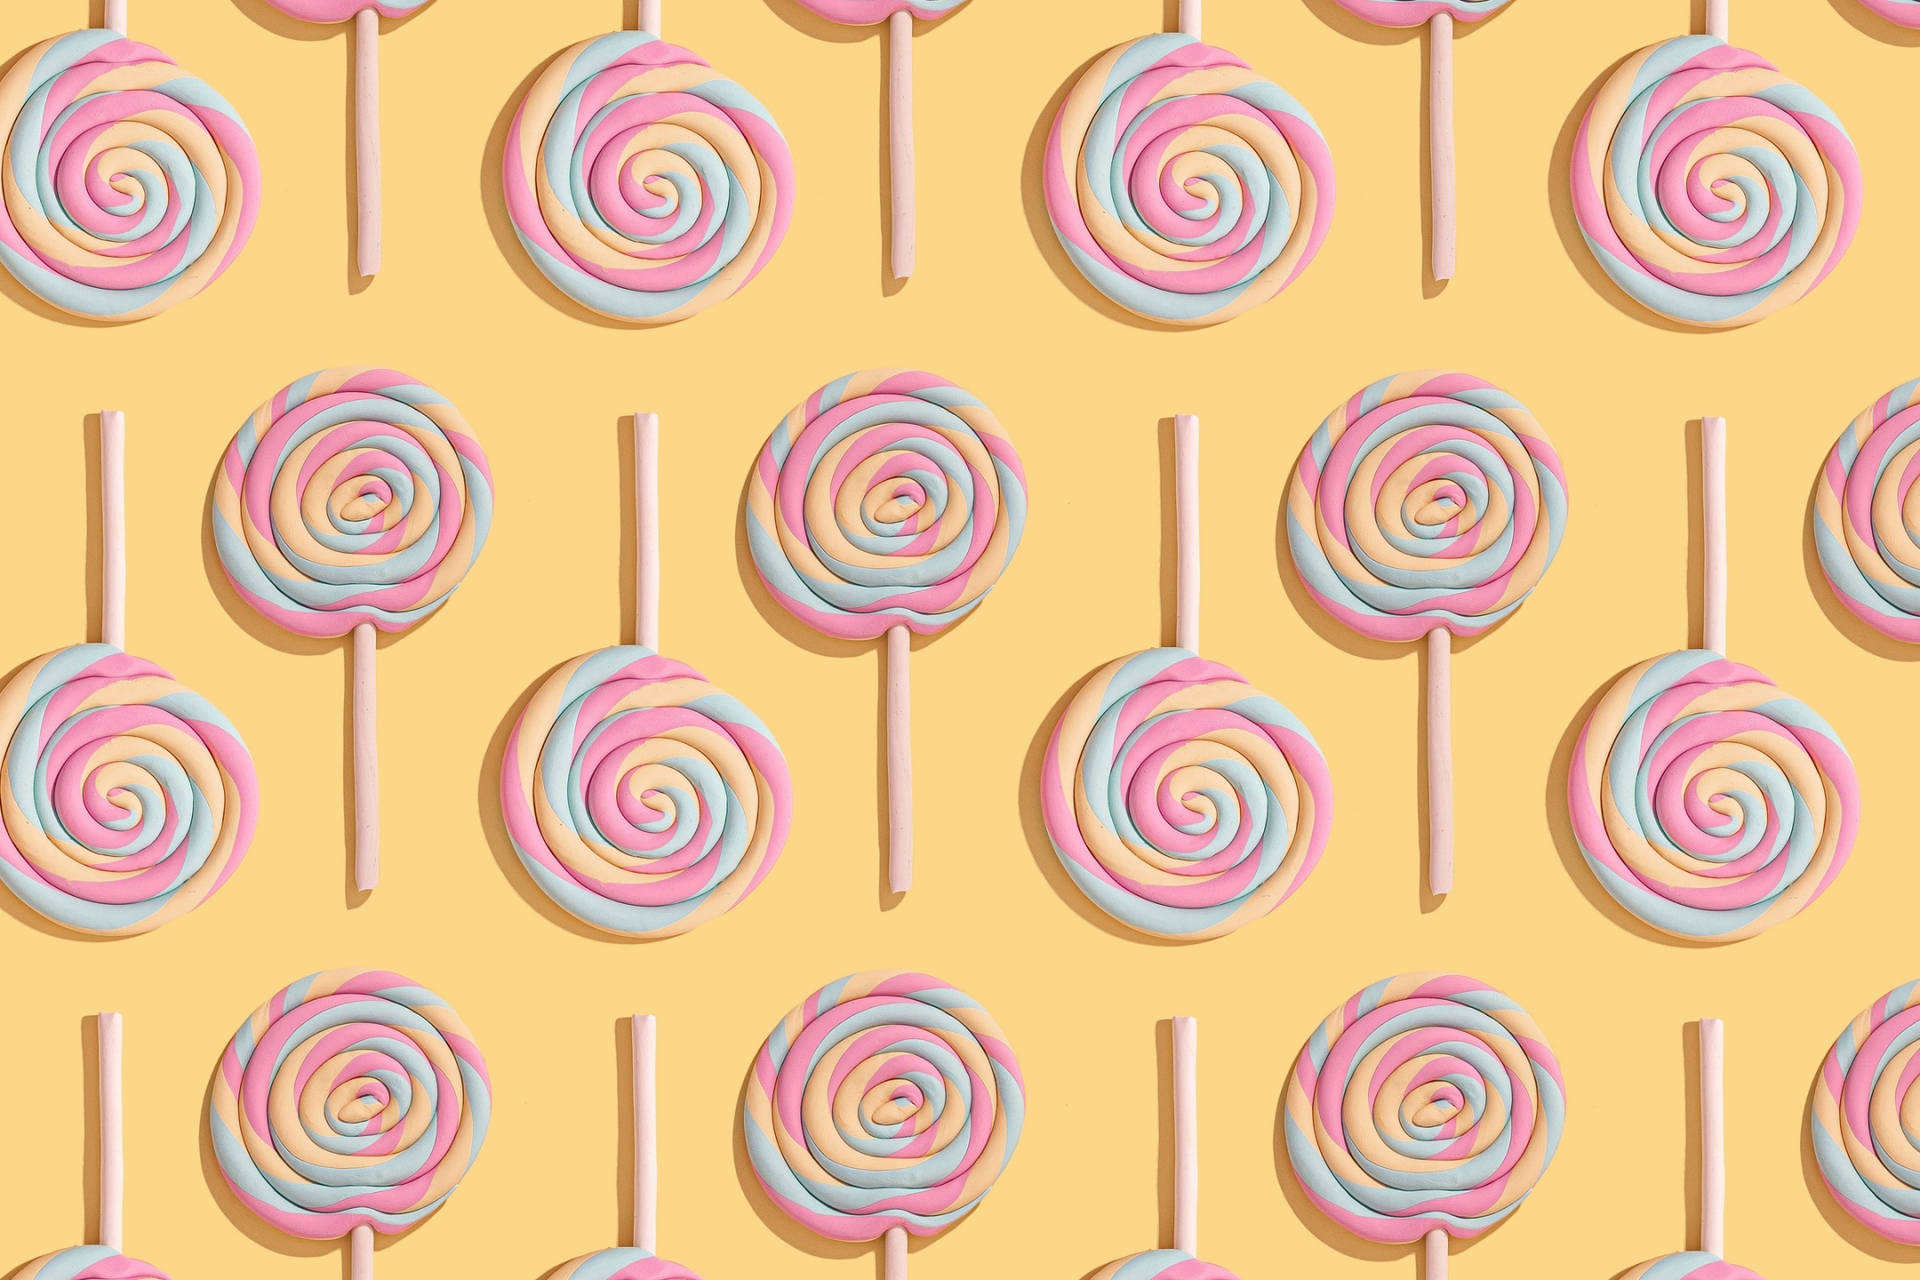 Lollipop Candies Pattern Image wallpaper.